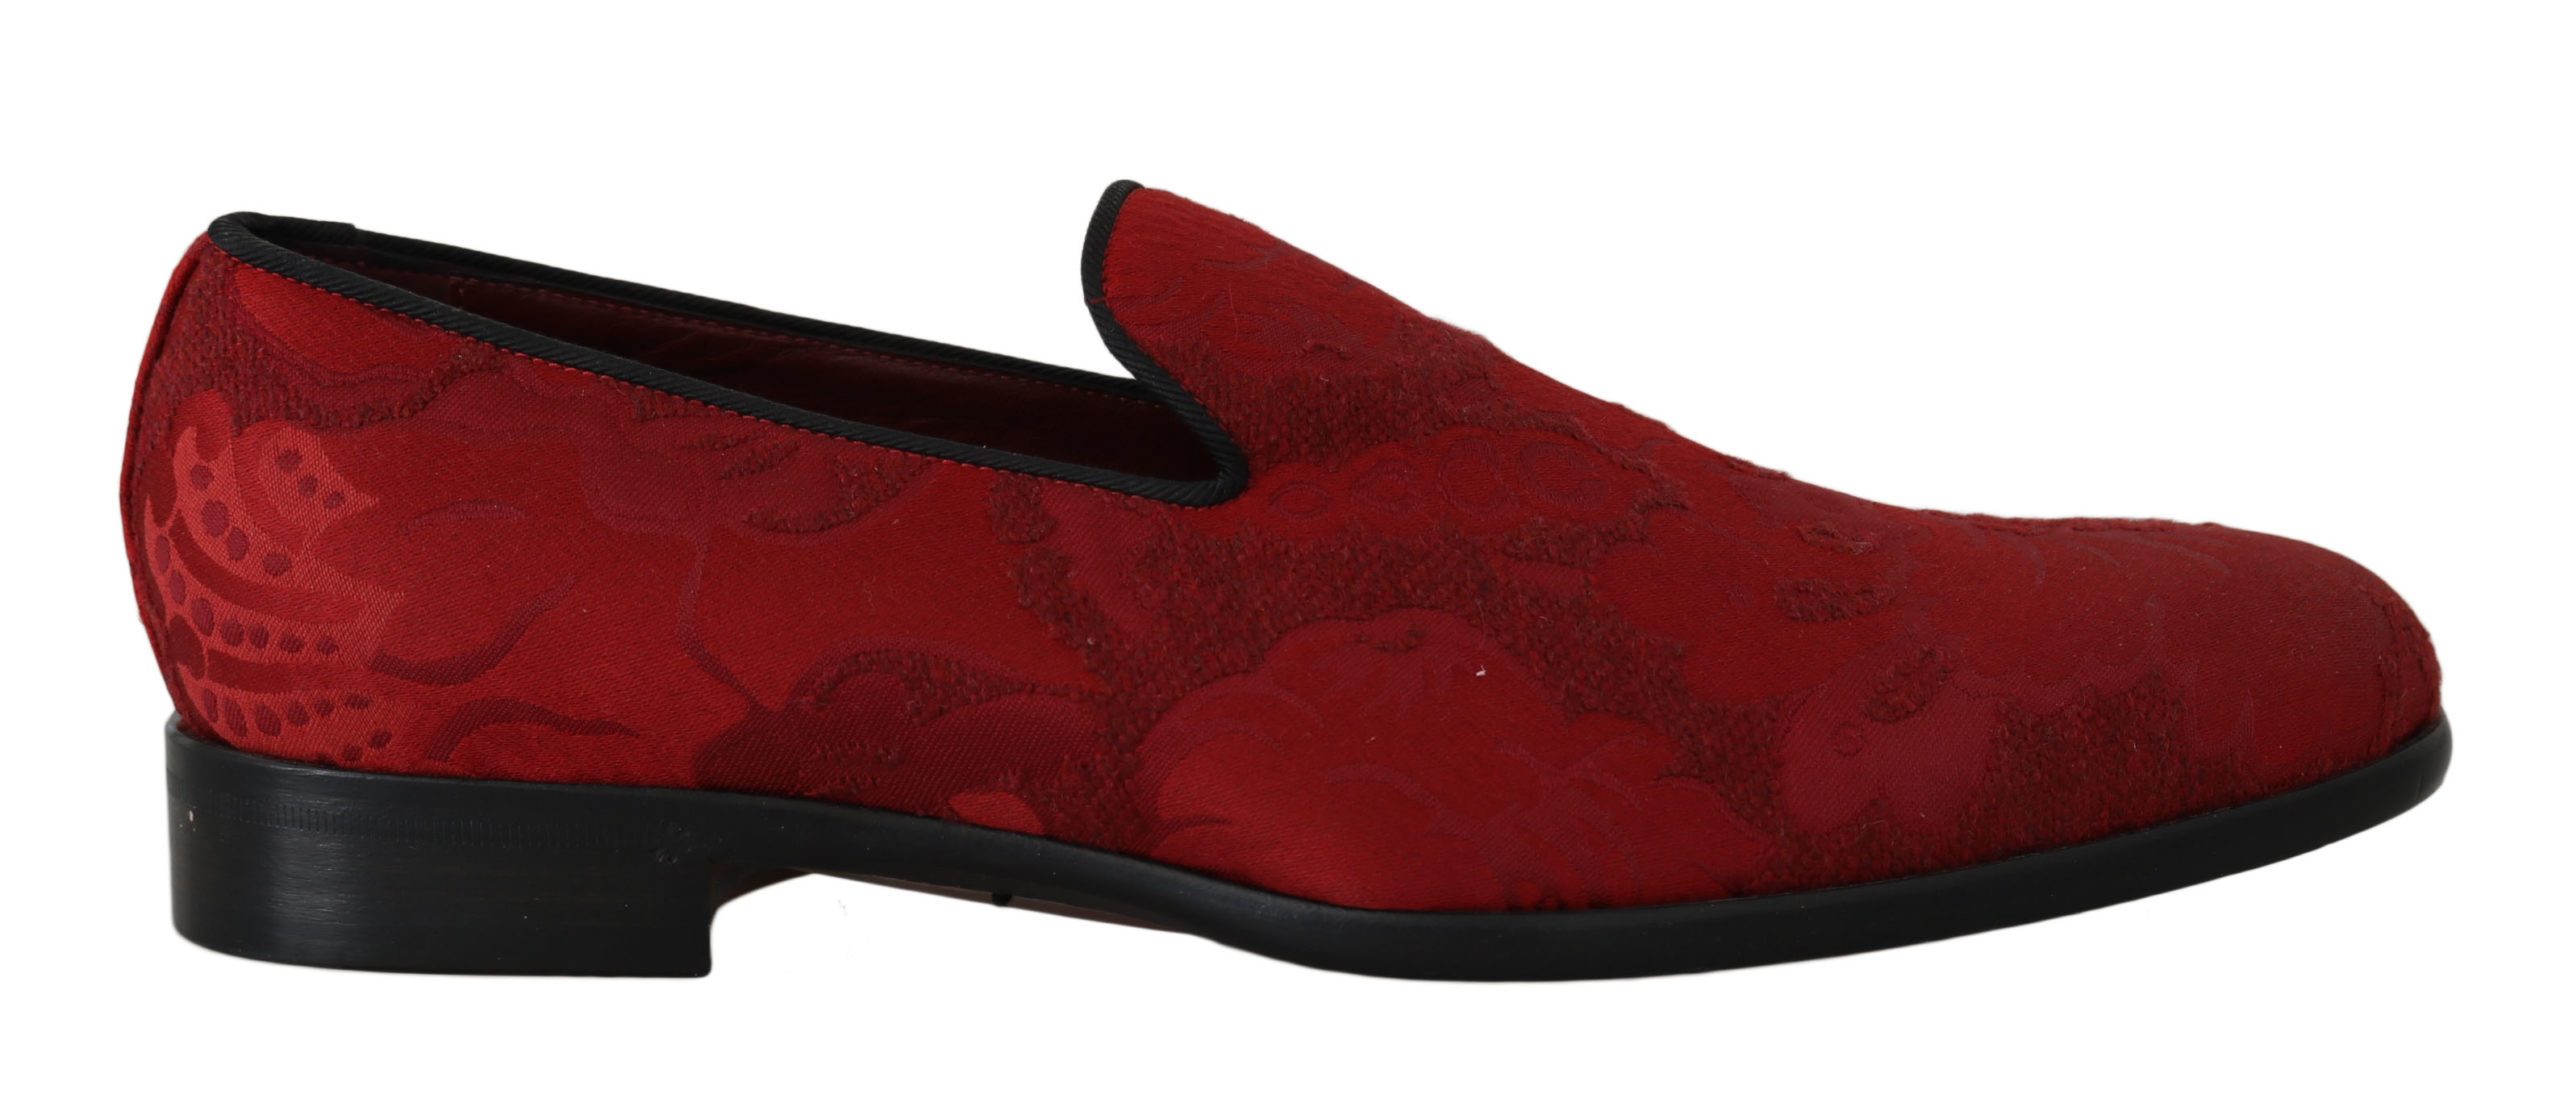 Dolce & Gabbana Men's Jacquard Loafers Dress Formal Shoes Red MV2266 - EU39/US6